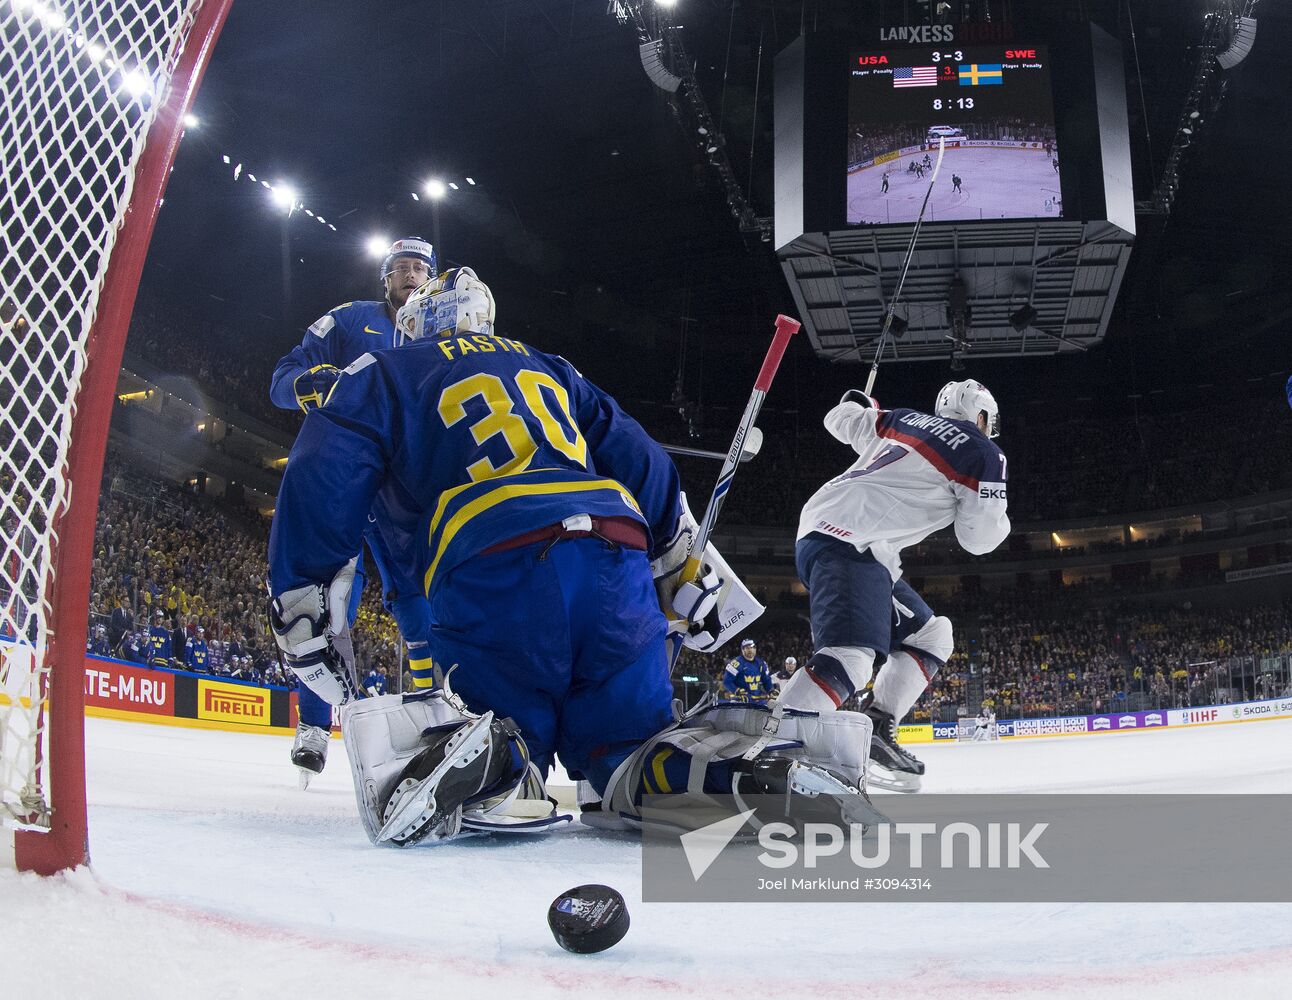 2017 IIHF World Championship. USA vs. Sweden